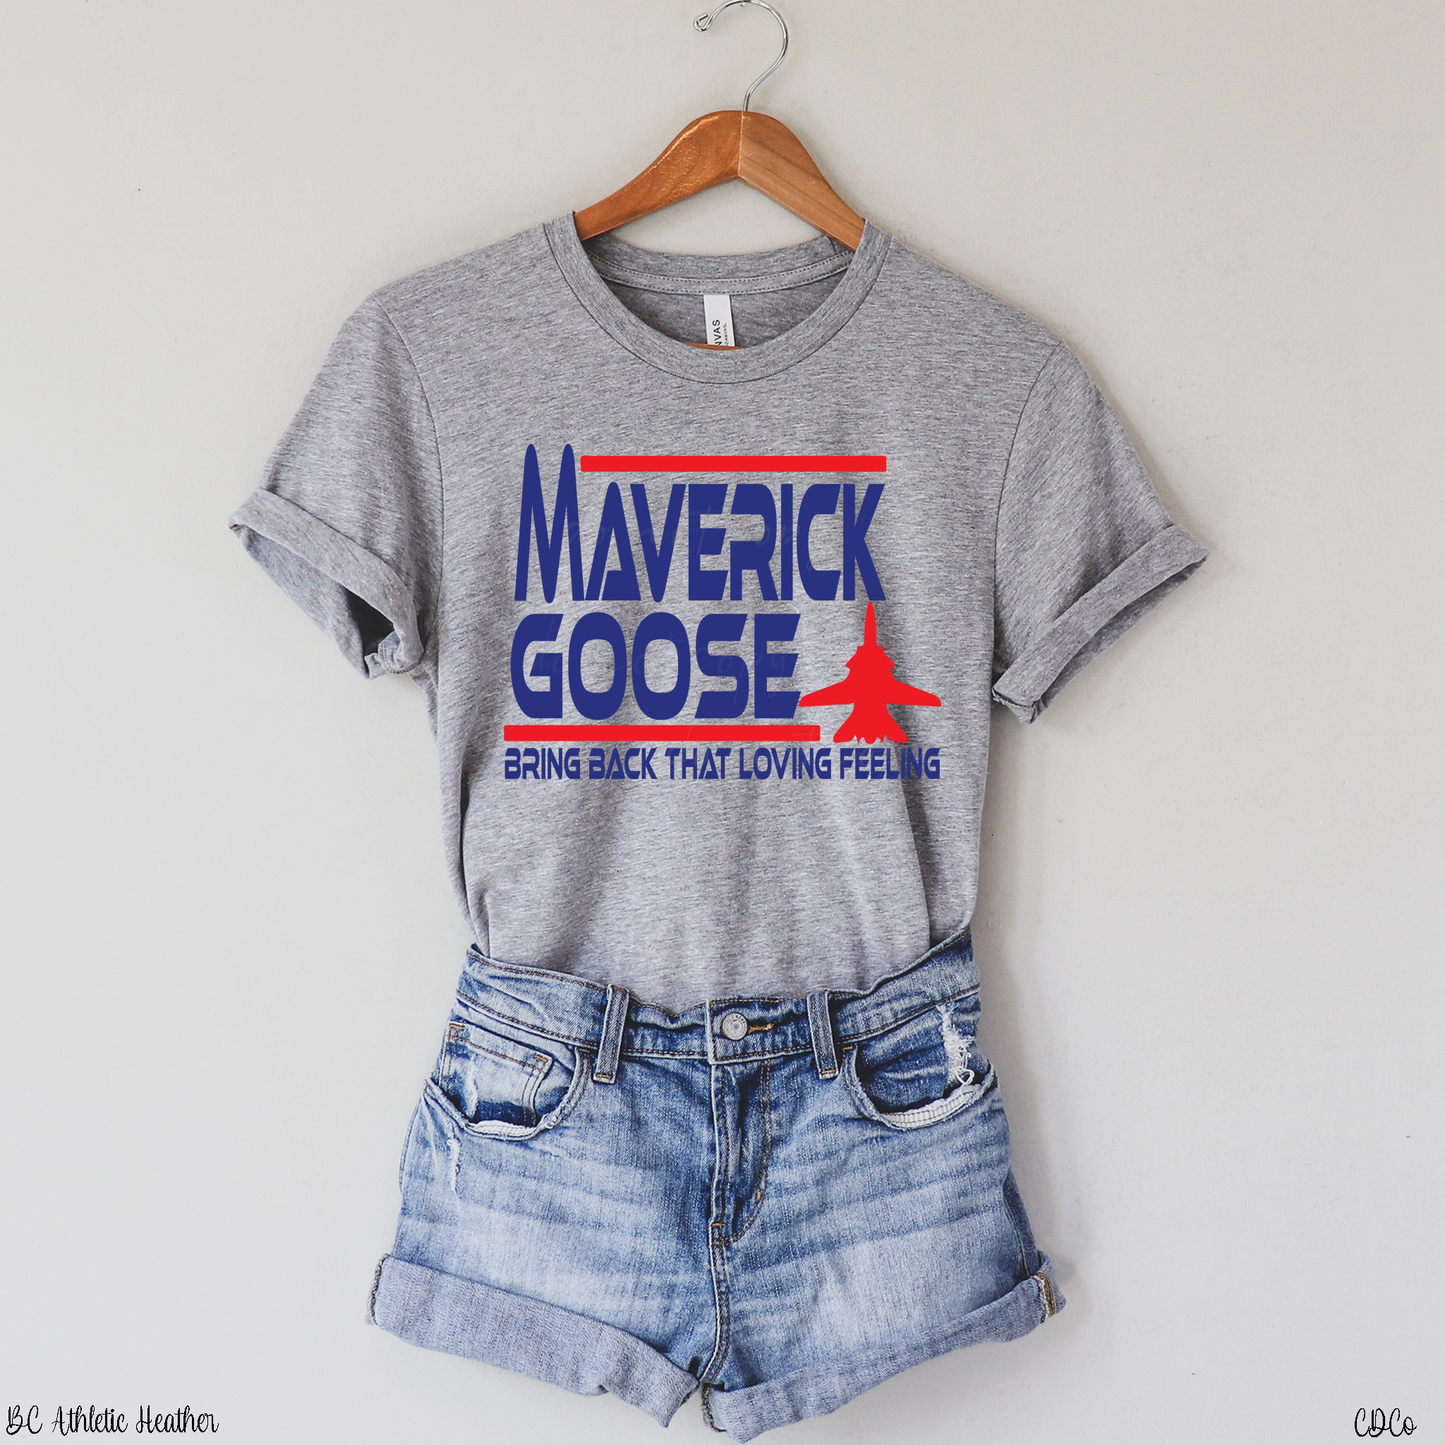 Maverick Goose Bring Back That Loving Feeling 2/C (325°)